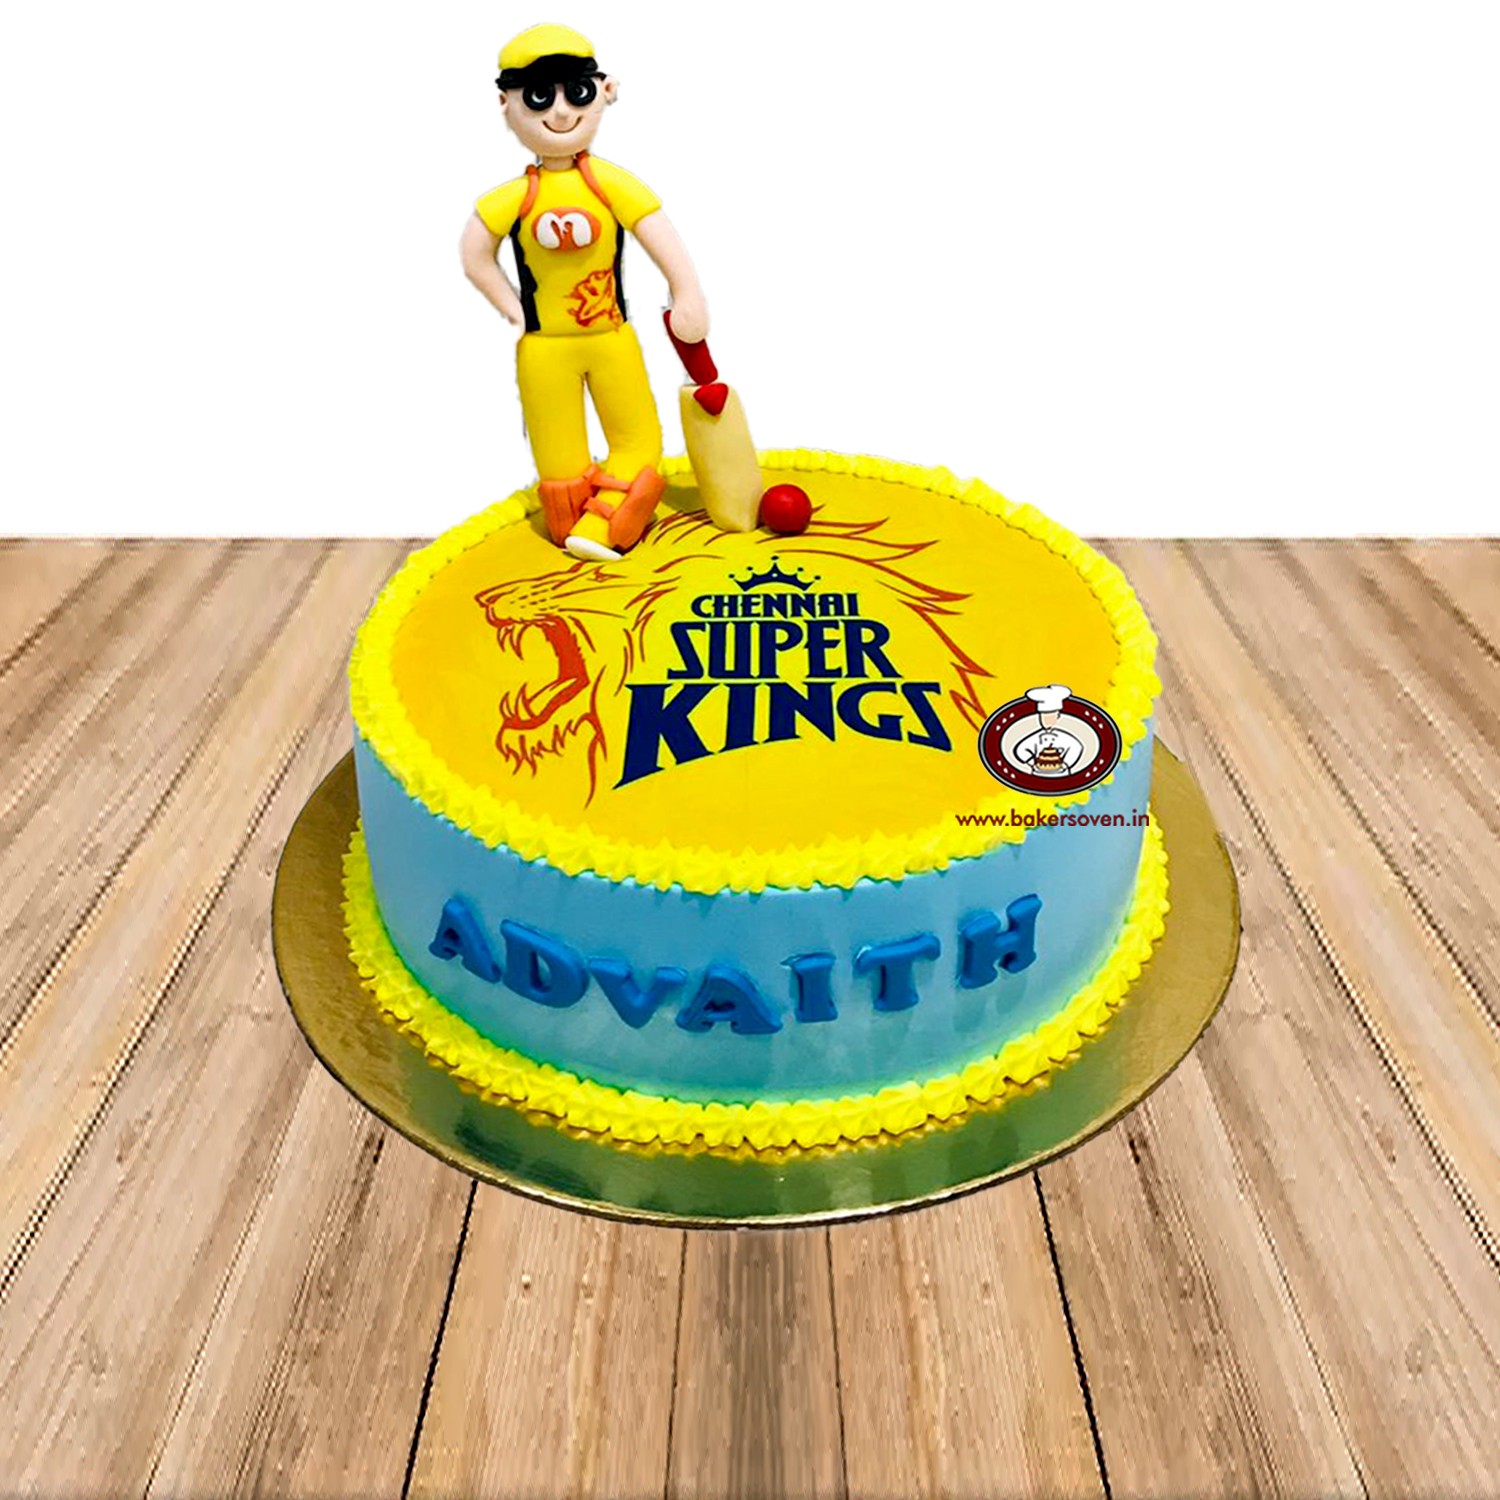 Watch: Skipper MS Dhoni Cuts 5-Tier Cake After Chennai Super Kings IPL Win  - NDTV Food